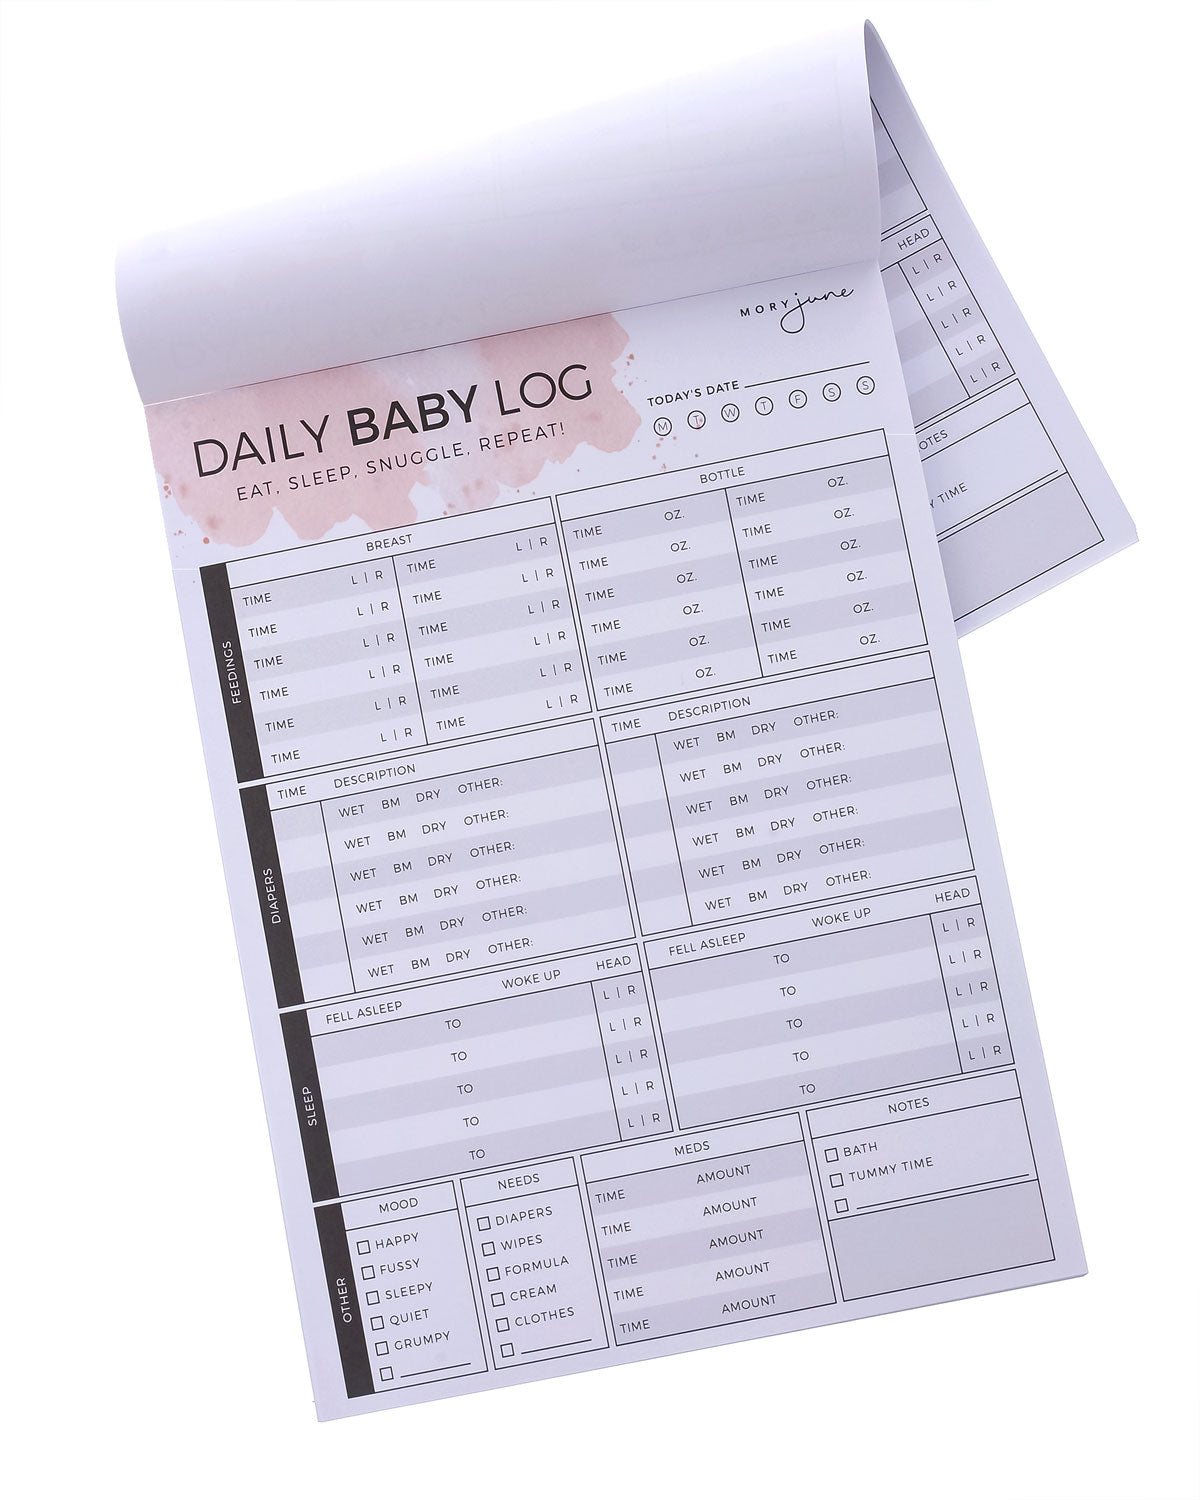 Daily Baby Log